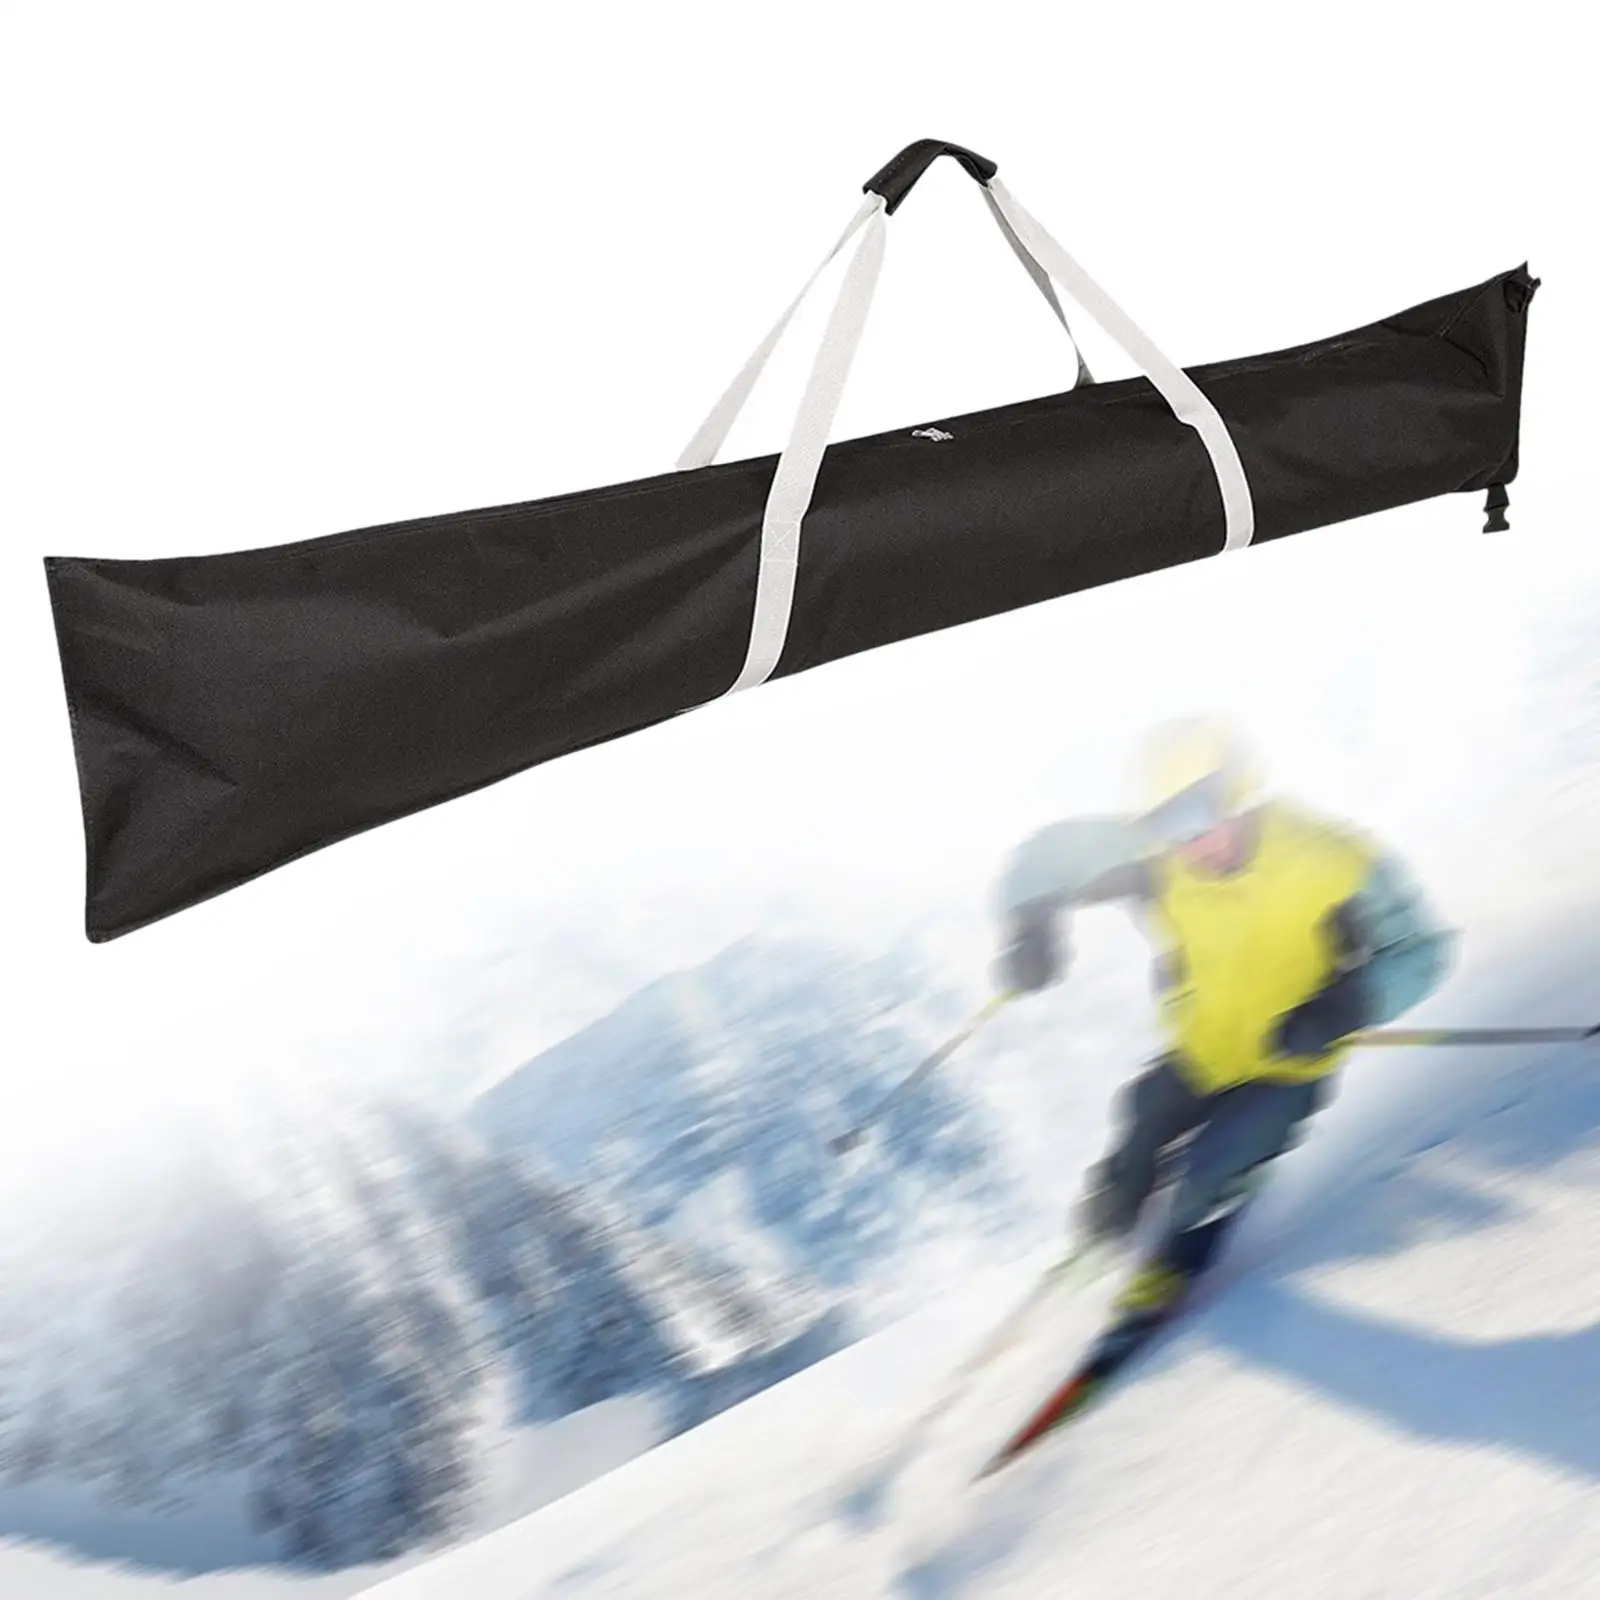 Ski Bag Snow Travel Transport Portable with Handle Snowboards Poles Bag Ski Travel Bag for Winter Sports Outdoor Gloves Skiing